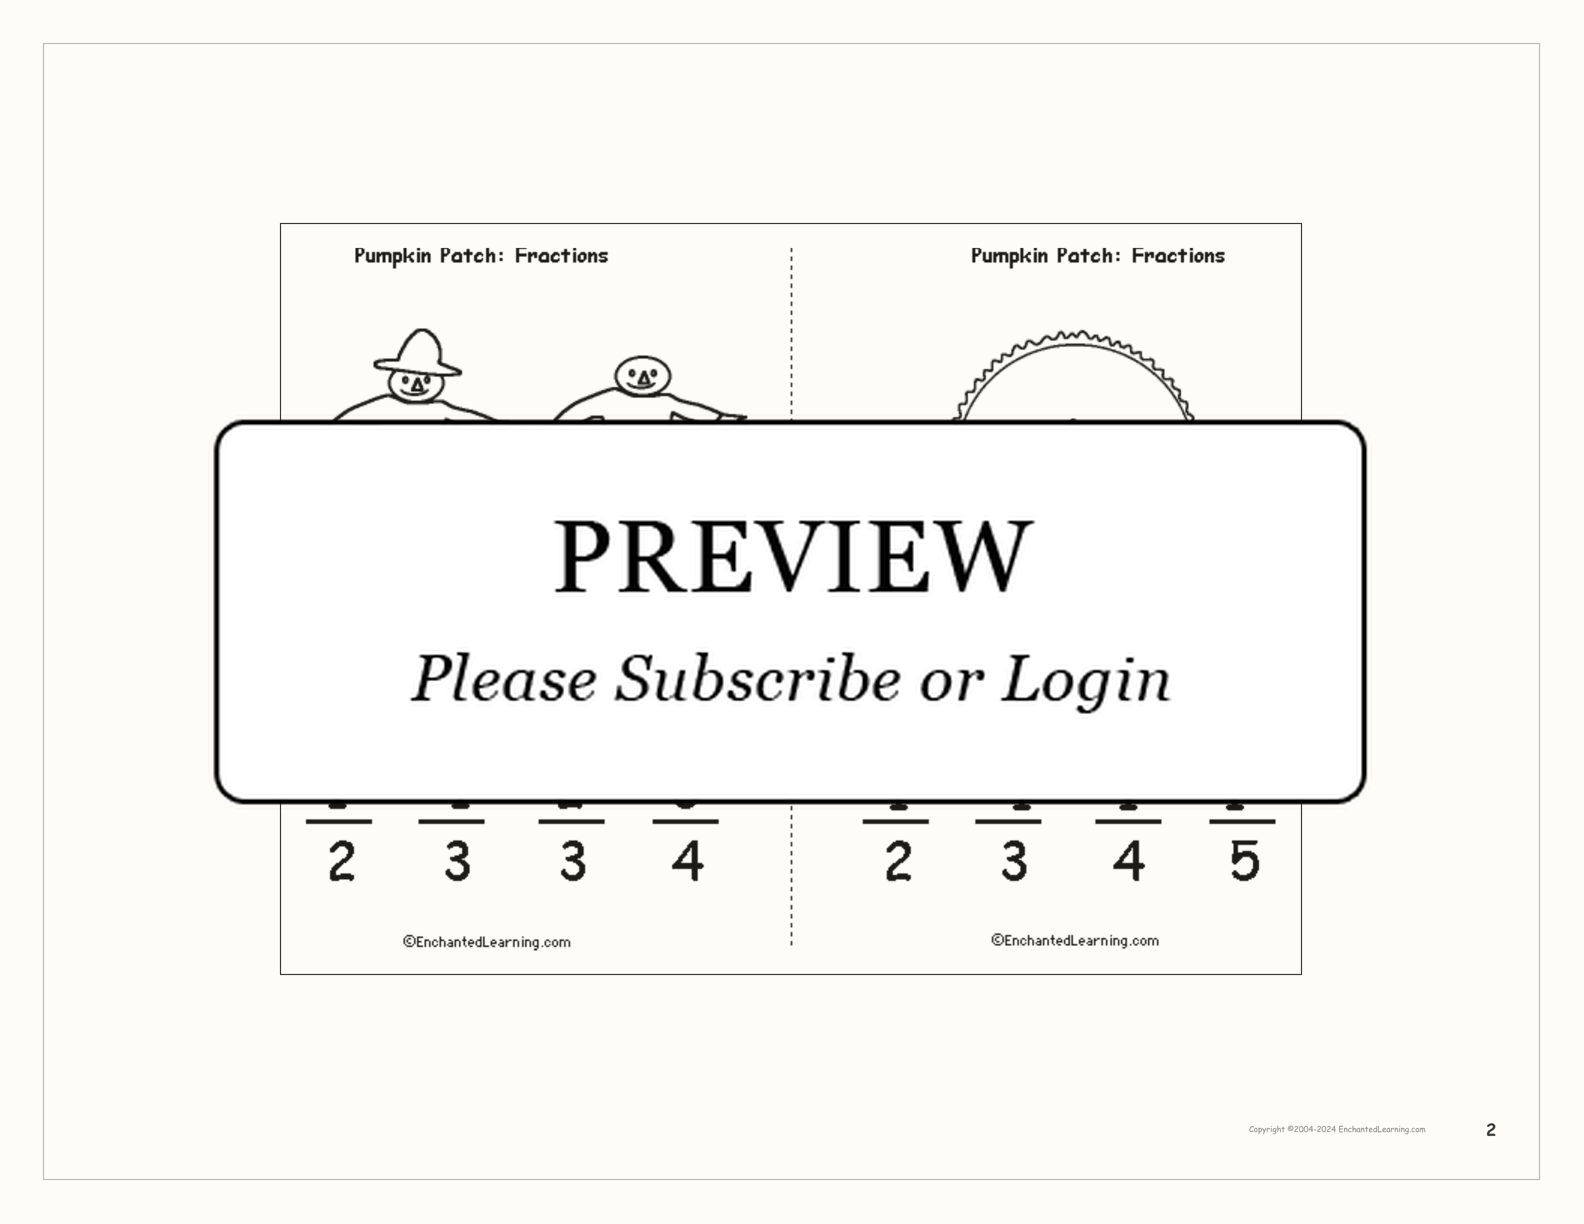 Pumpkin Patch: Fractions Book interactive printout page 2